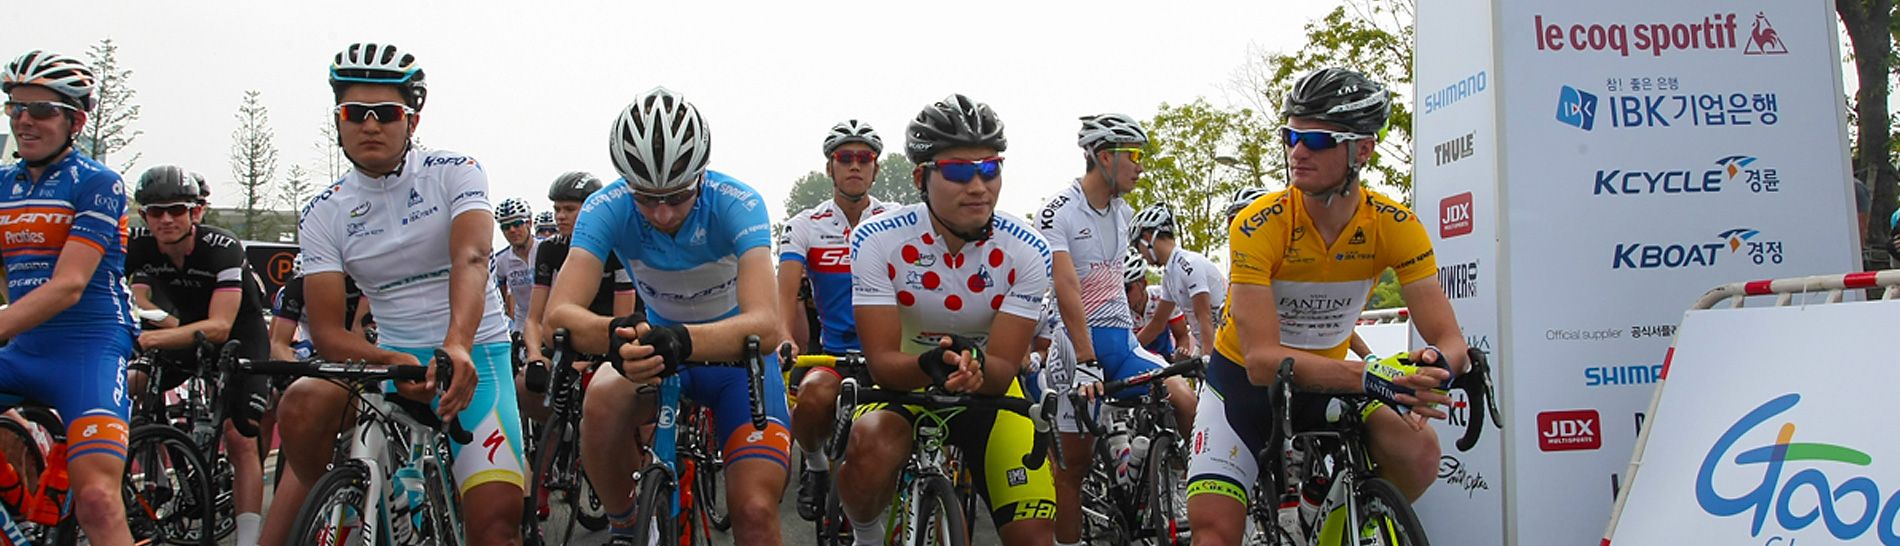 Tour de Korea: riders await the stage start